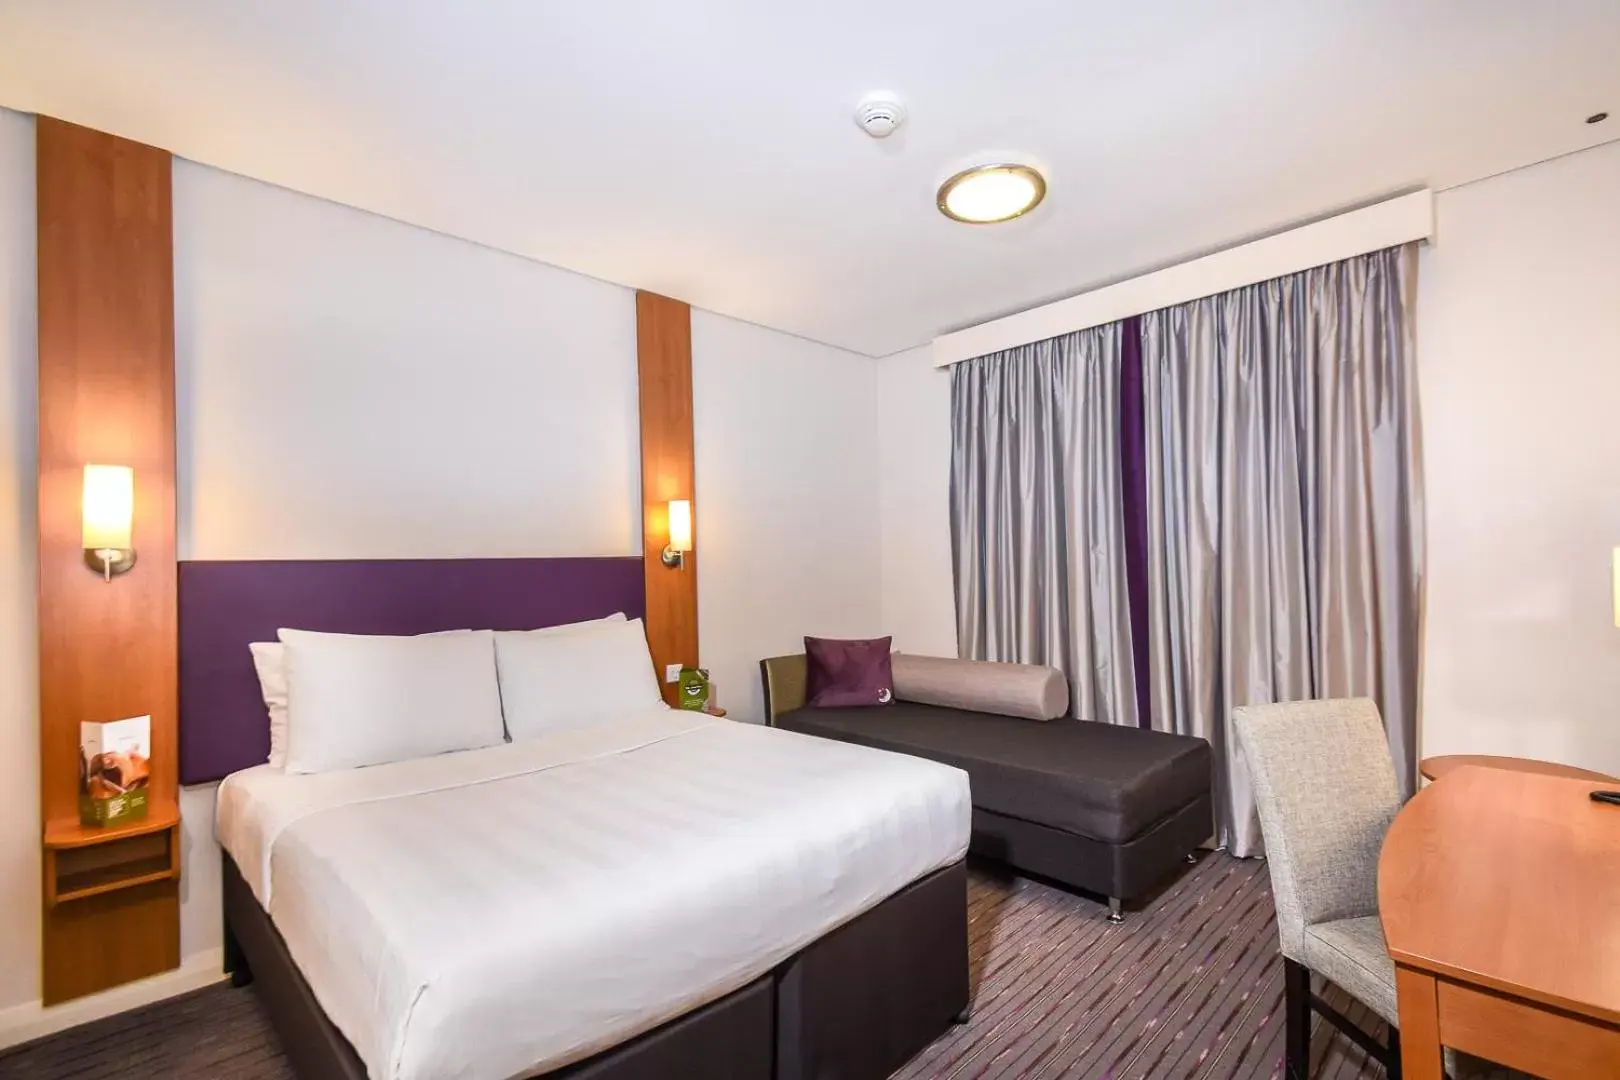 Double Room in Premier Inn Dubai Silicon Oasis